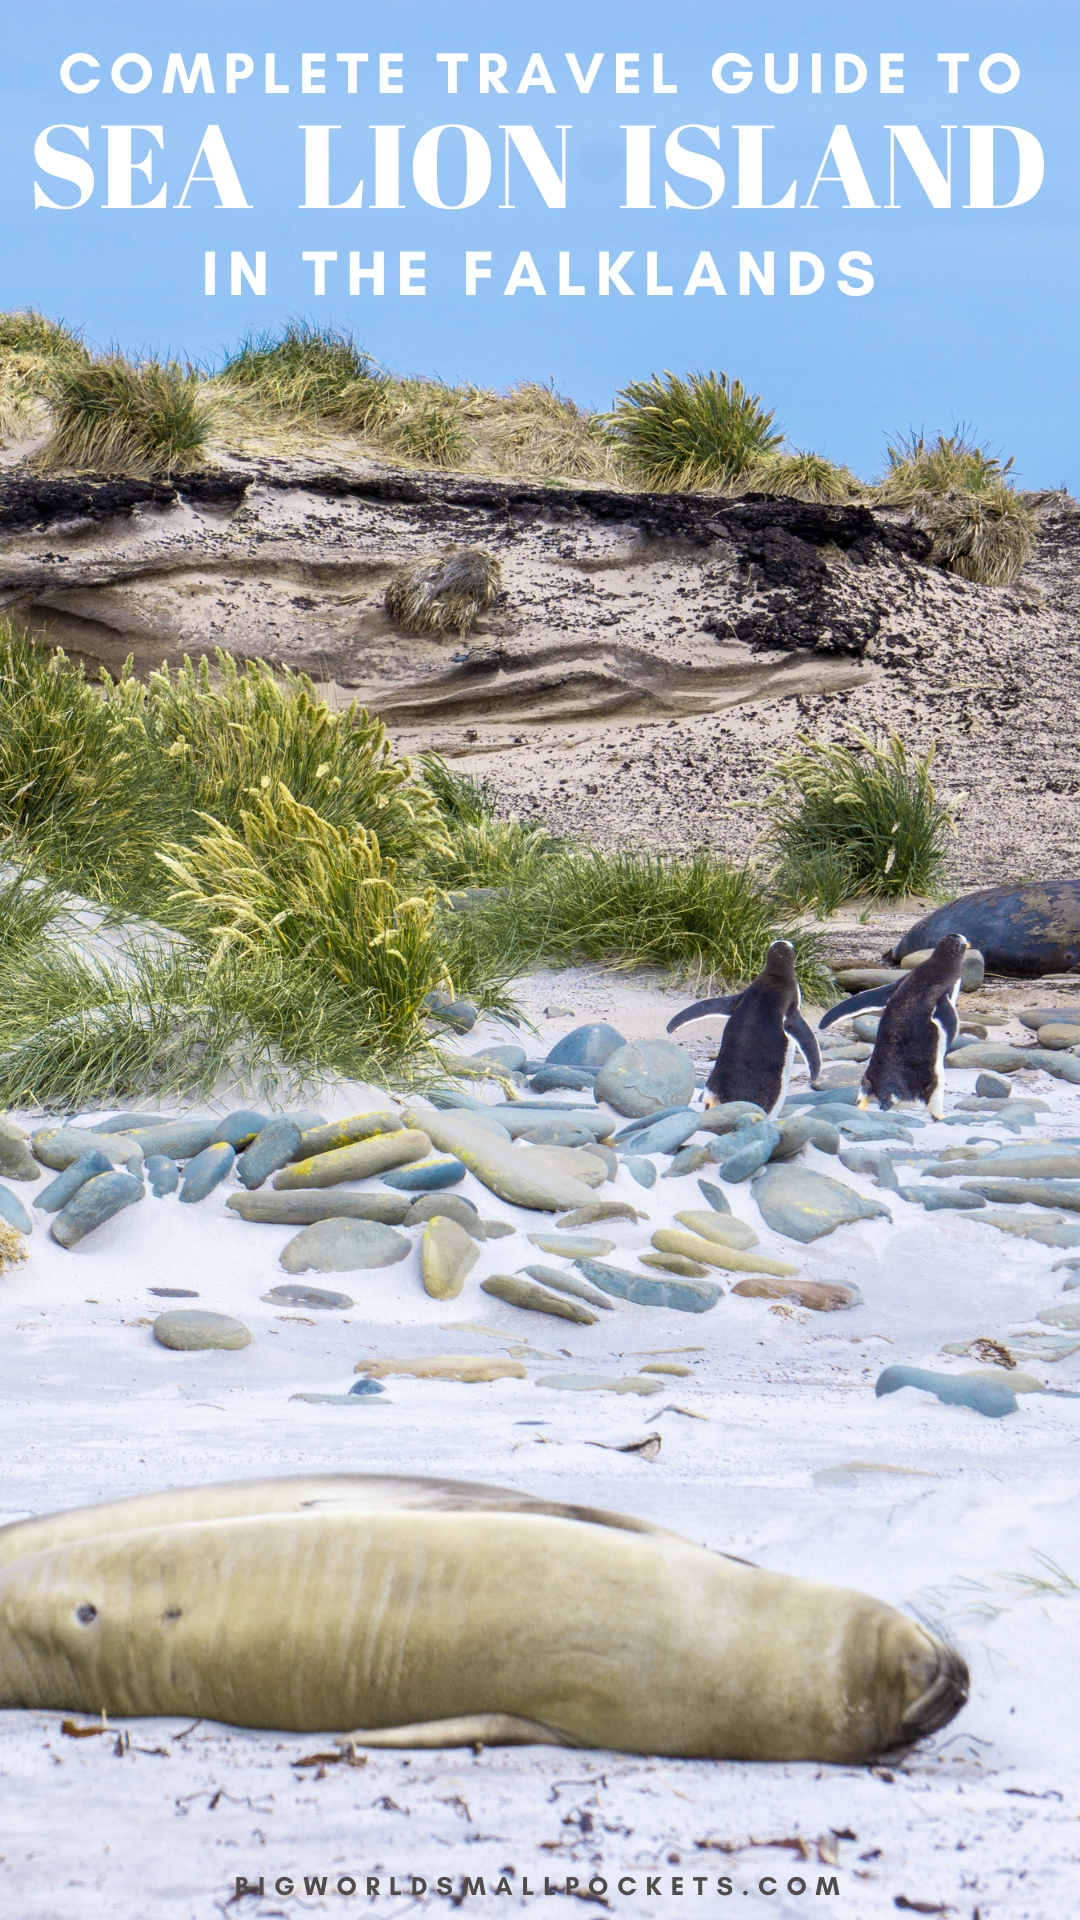 Travel Guide to Sea Lion Island, Falkland Islands